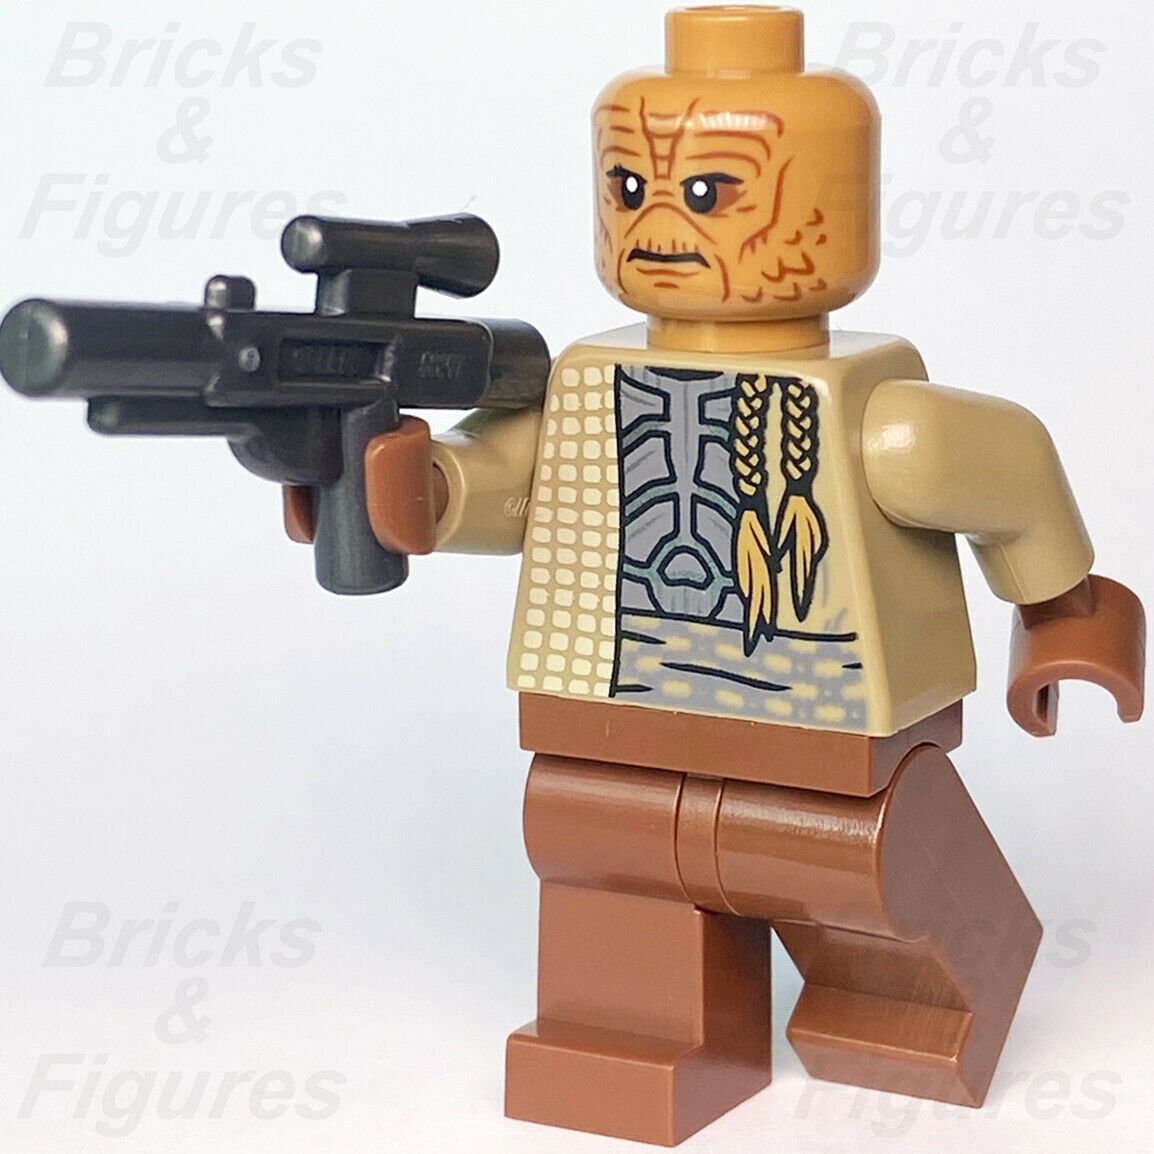 New Star Wars LEGO Weequay Guard The Book of Boba Fett Minifigure 75326 sw1197 - Bricks & Figures